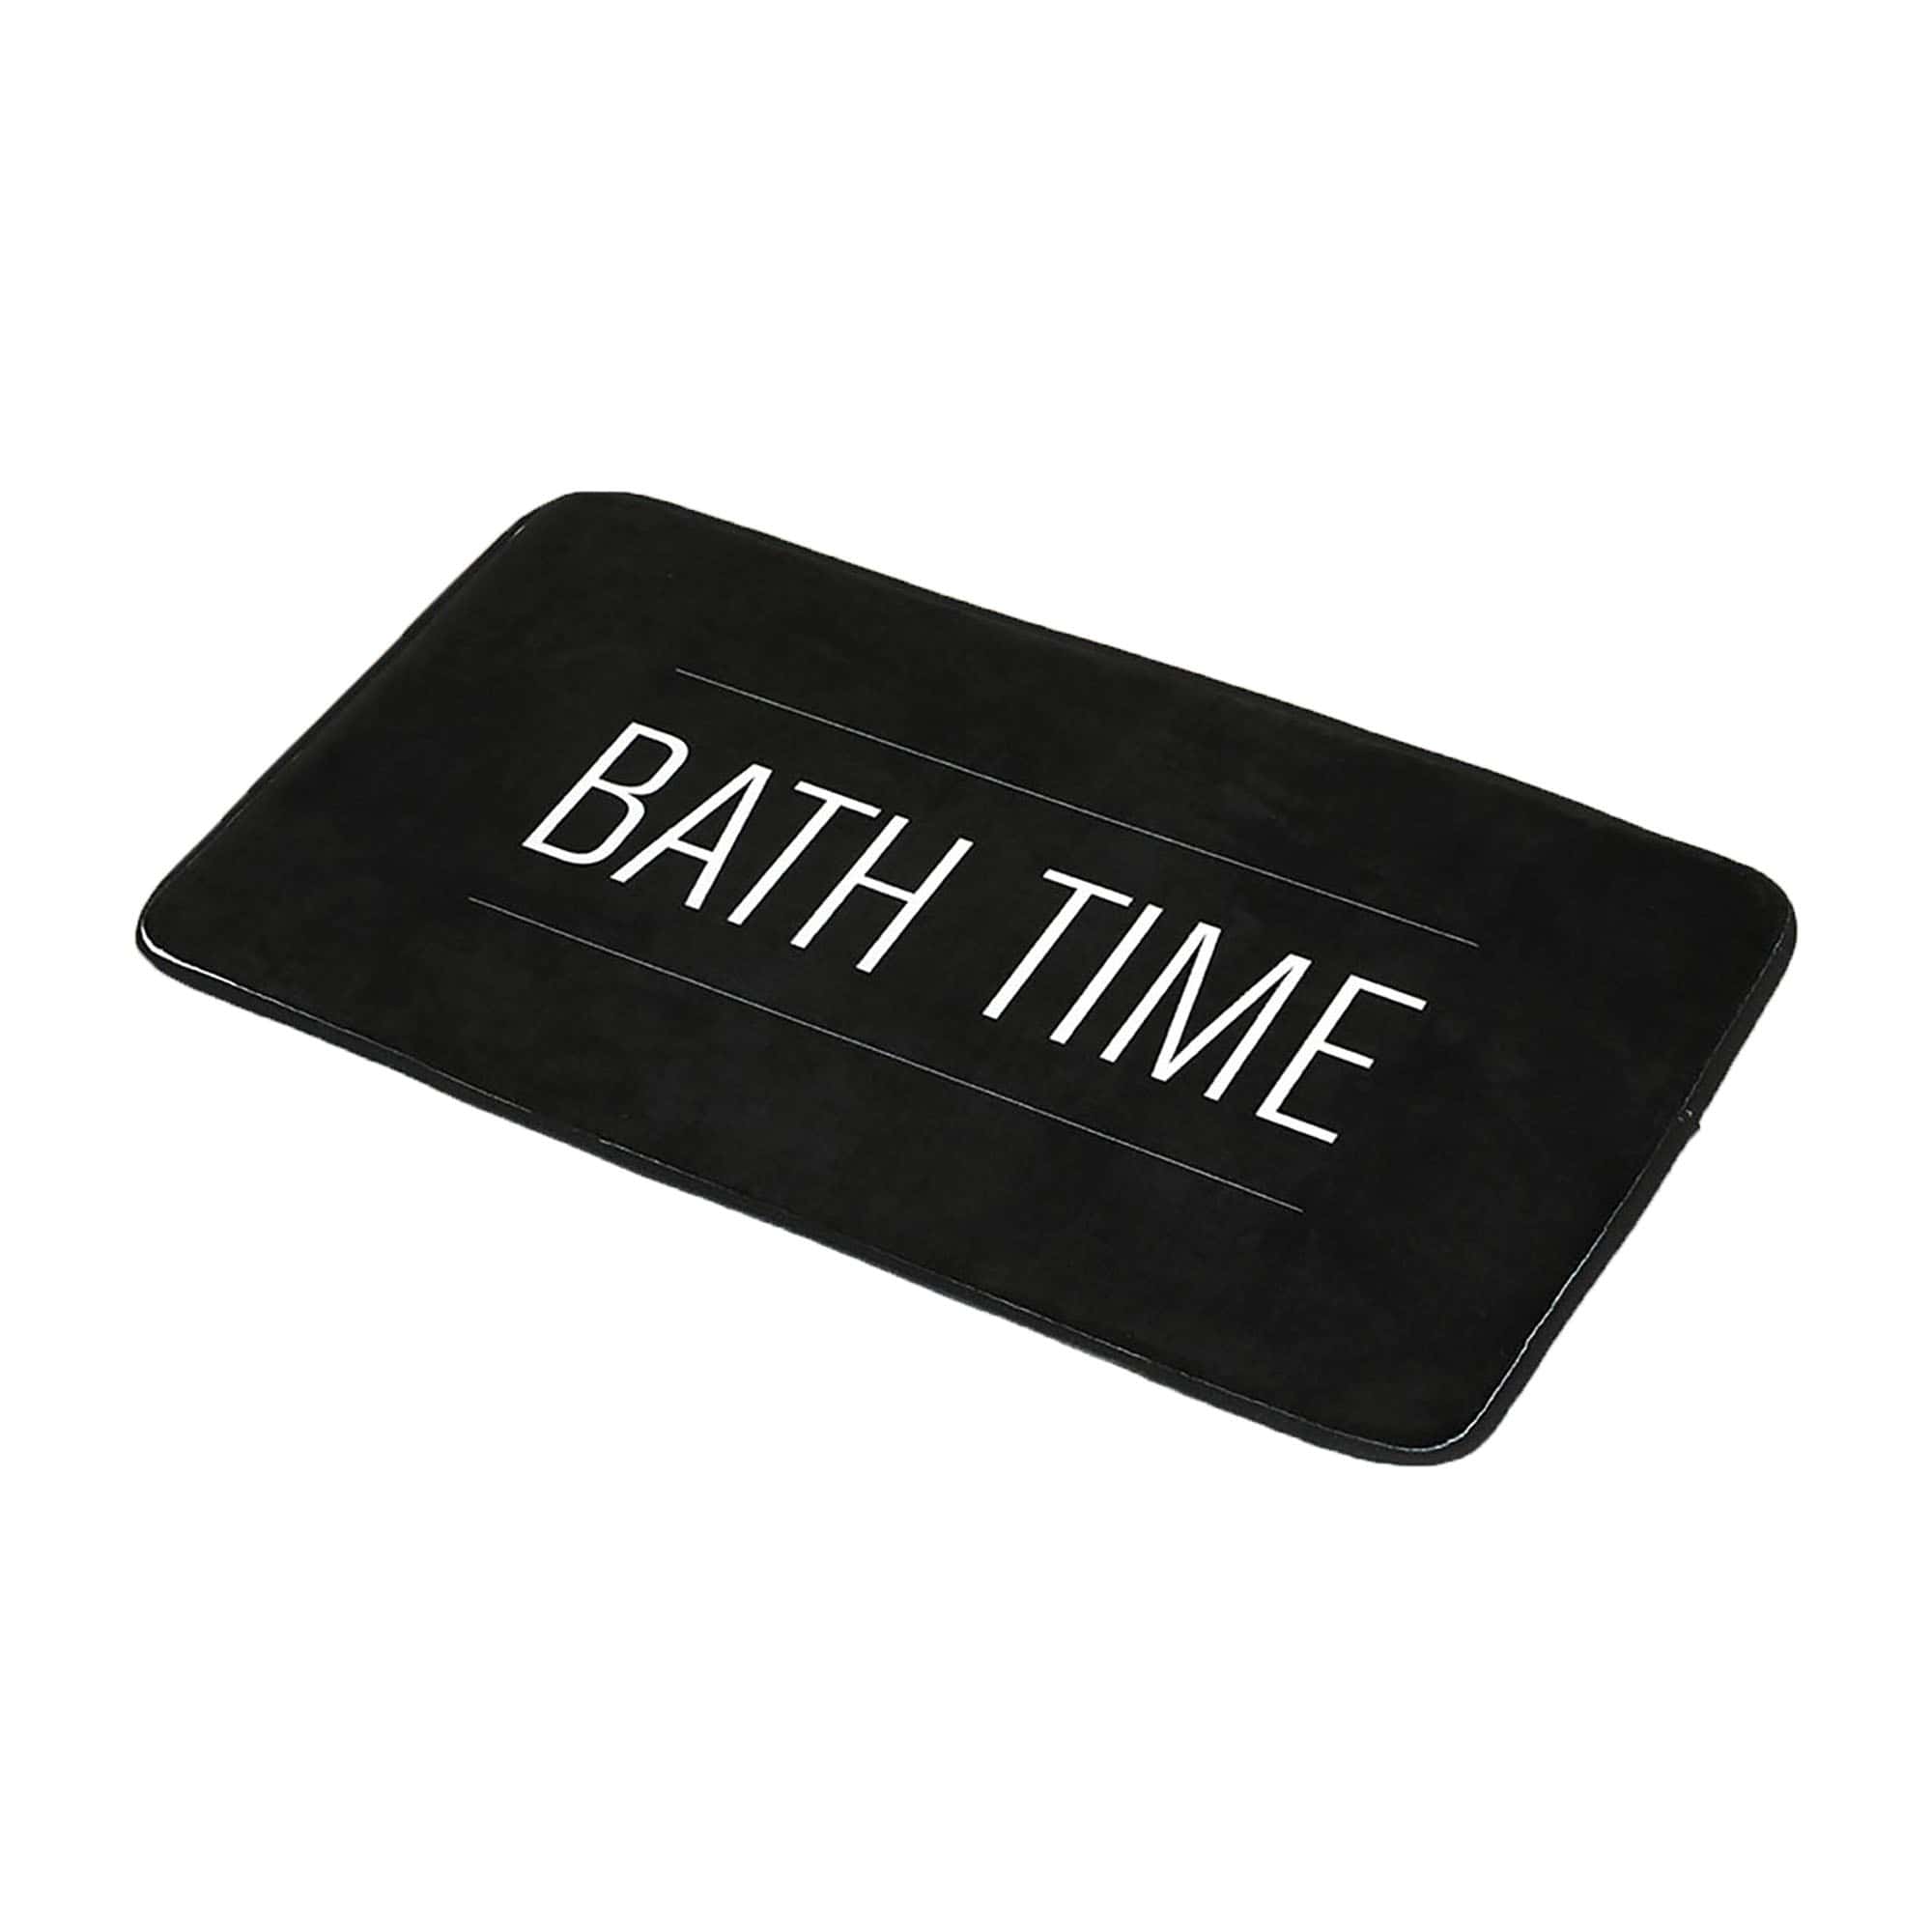 Solid Off-White Bath Mat